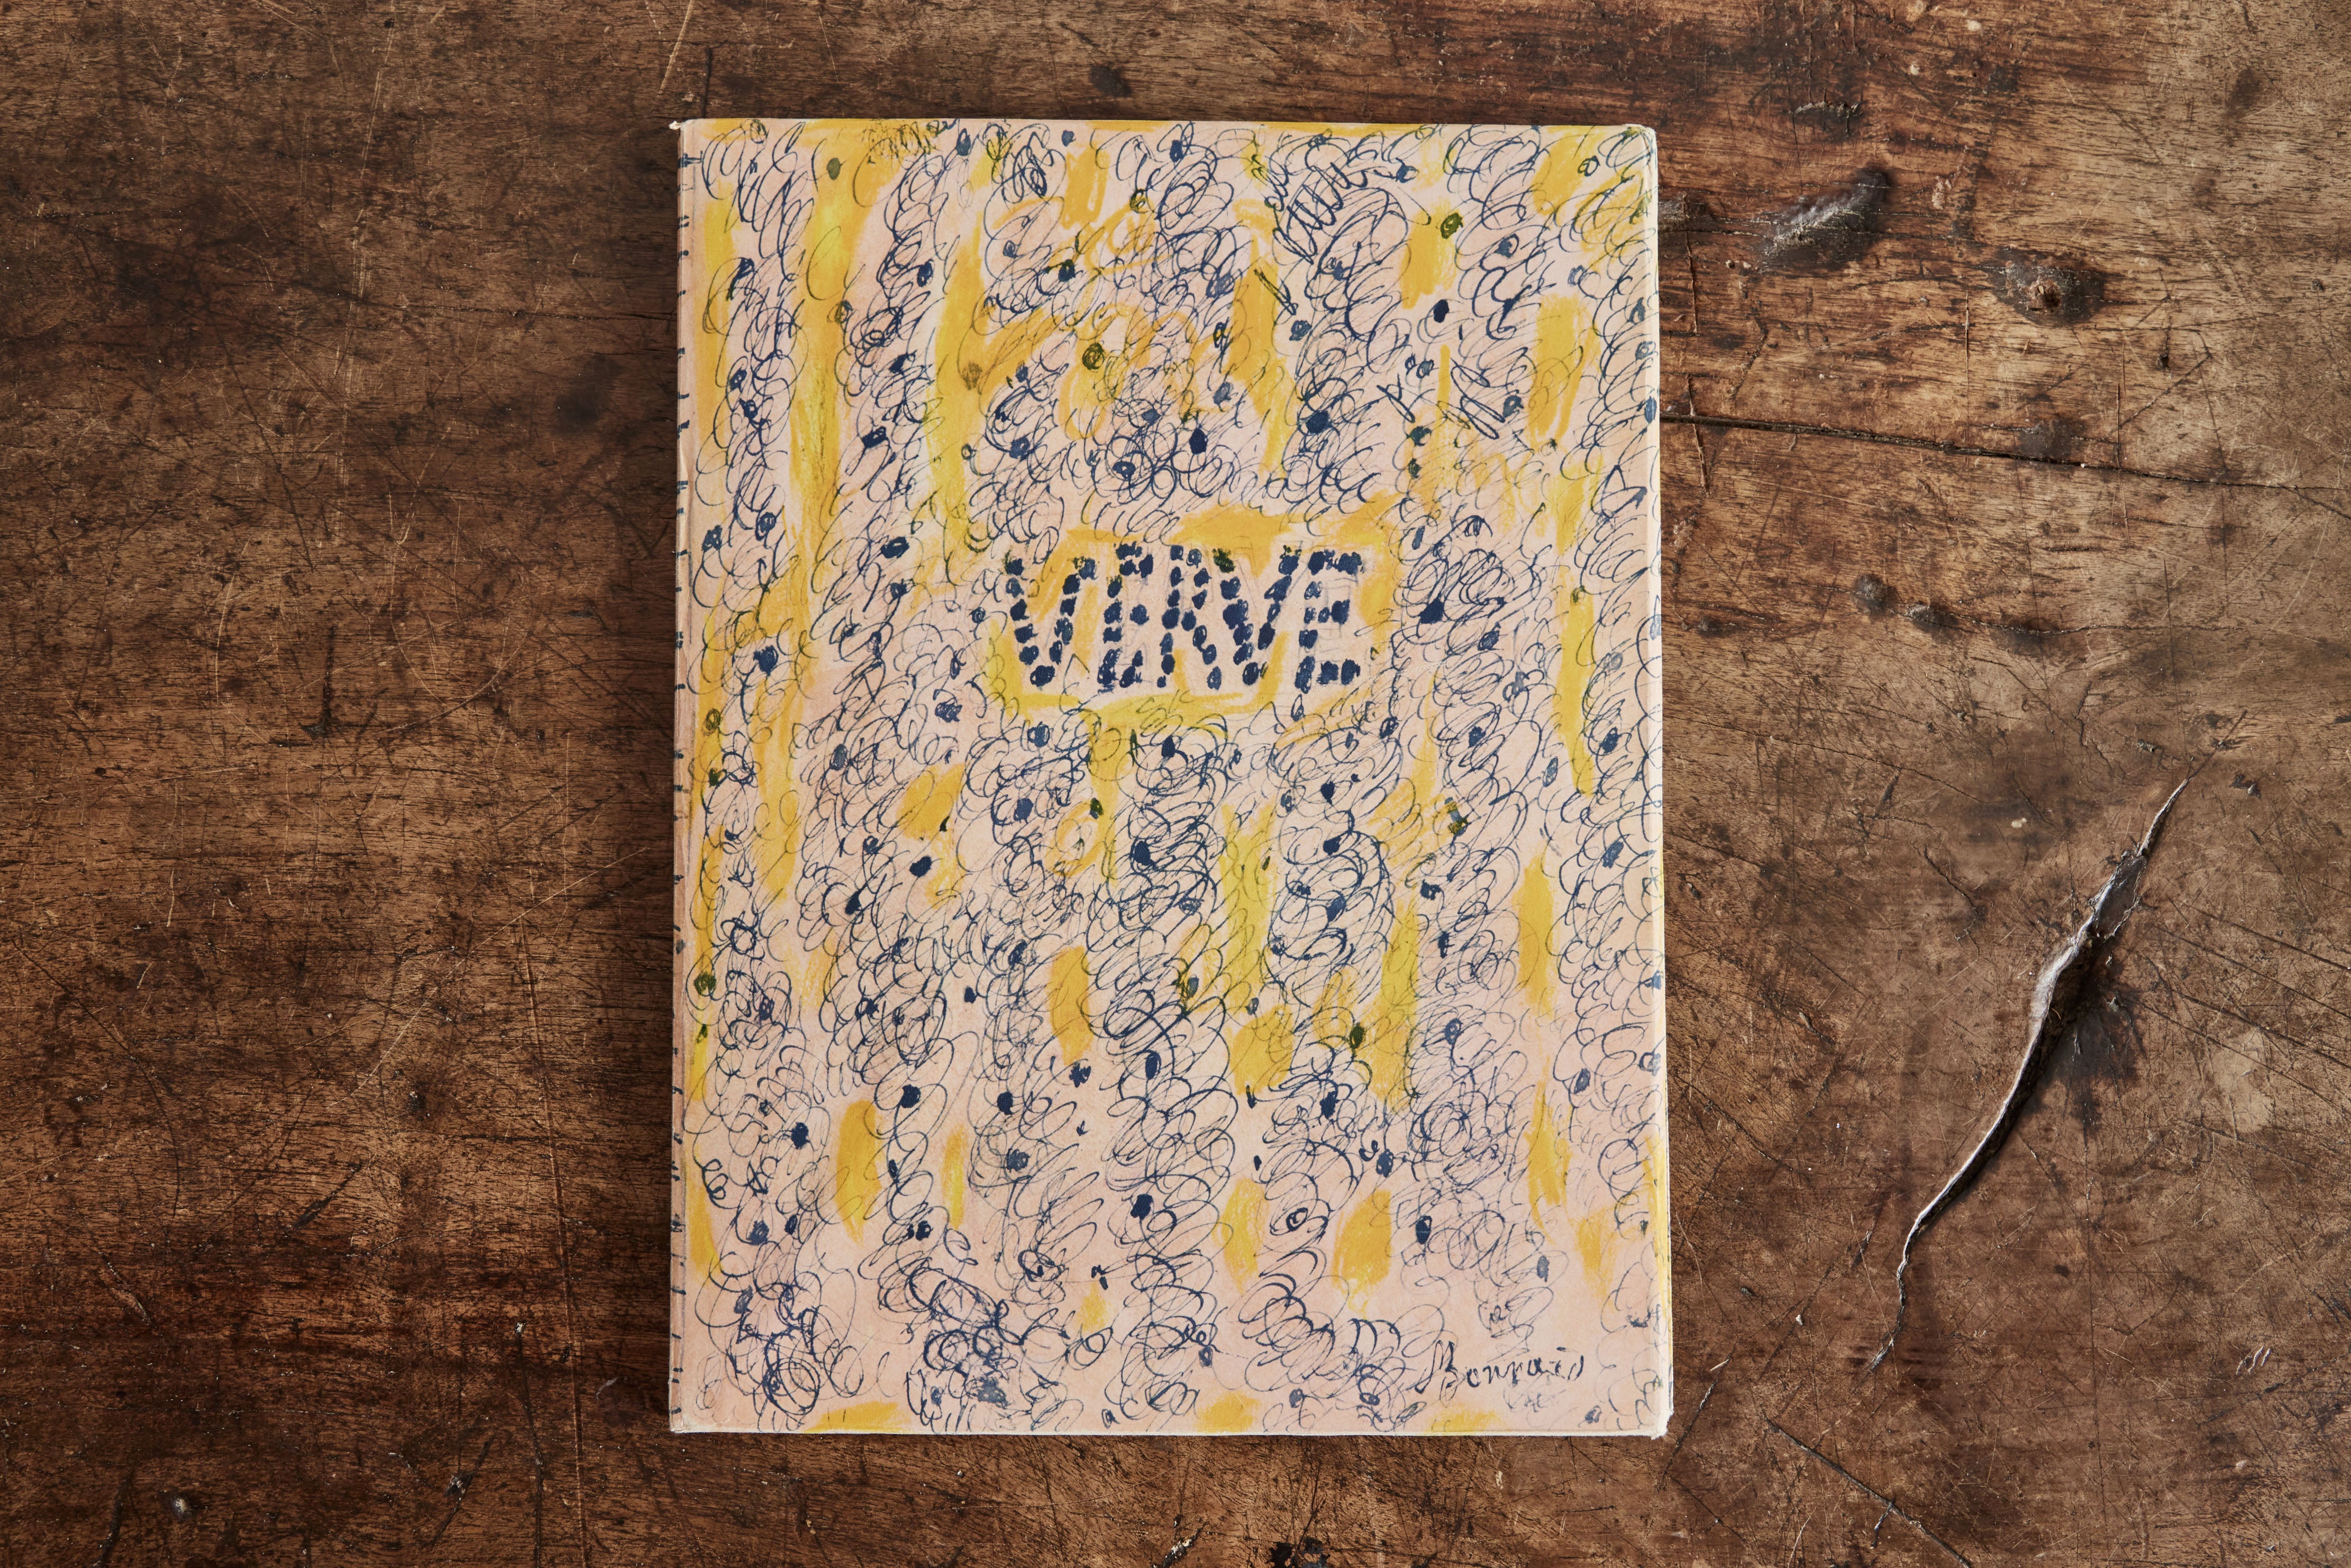 Verve Magazine Vol. 5, No. 17-18